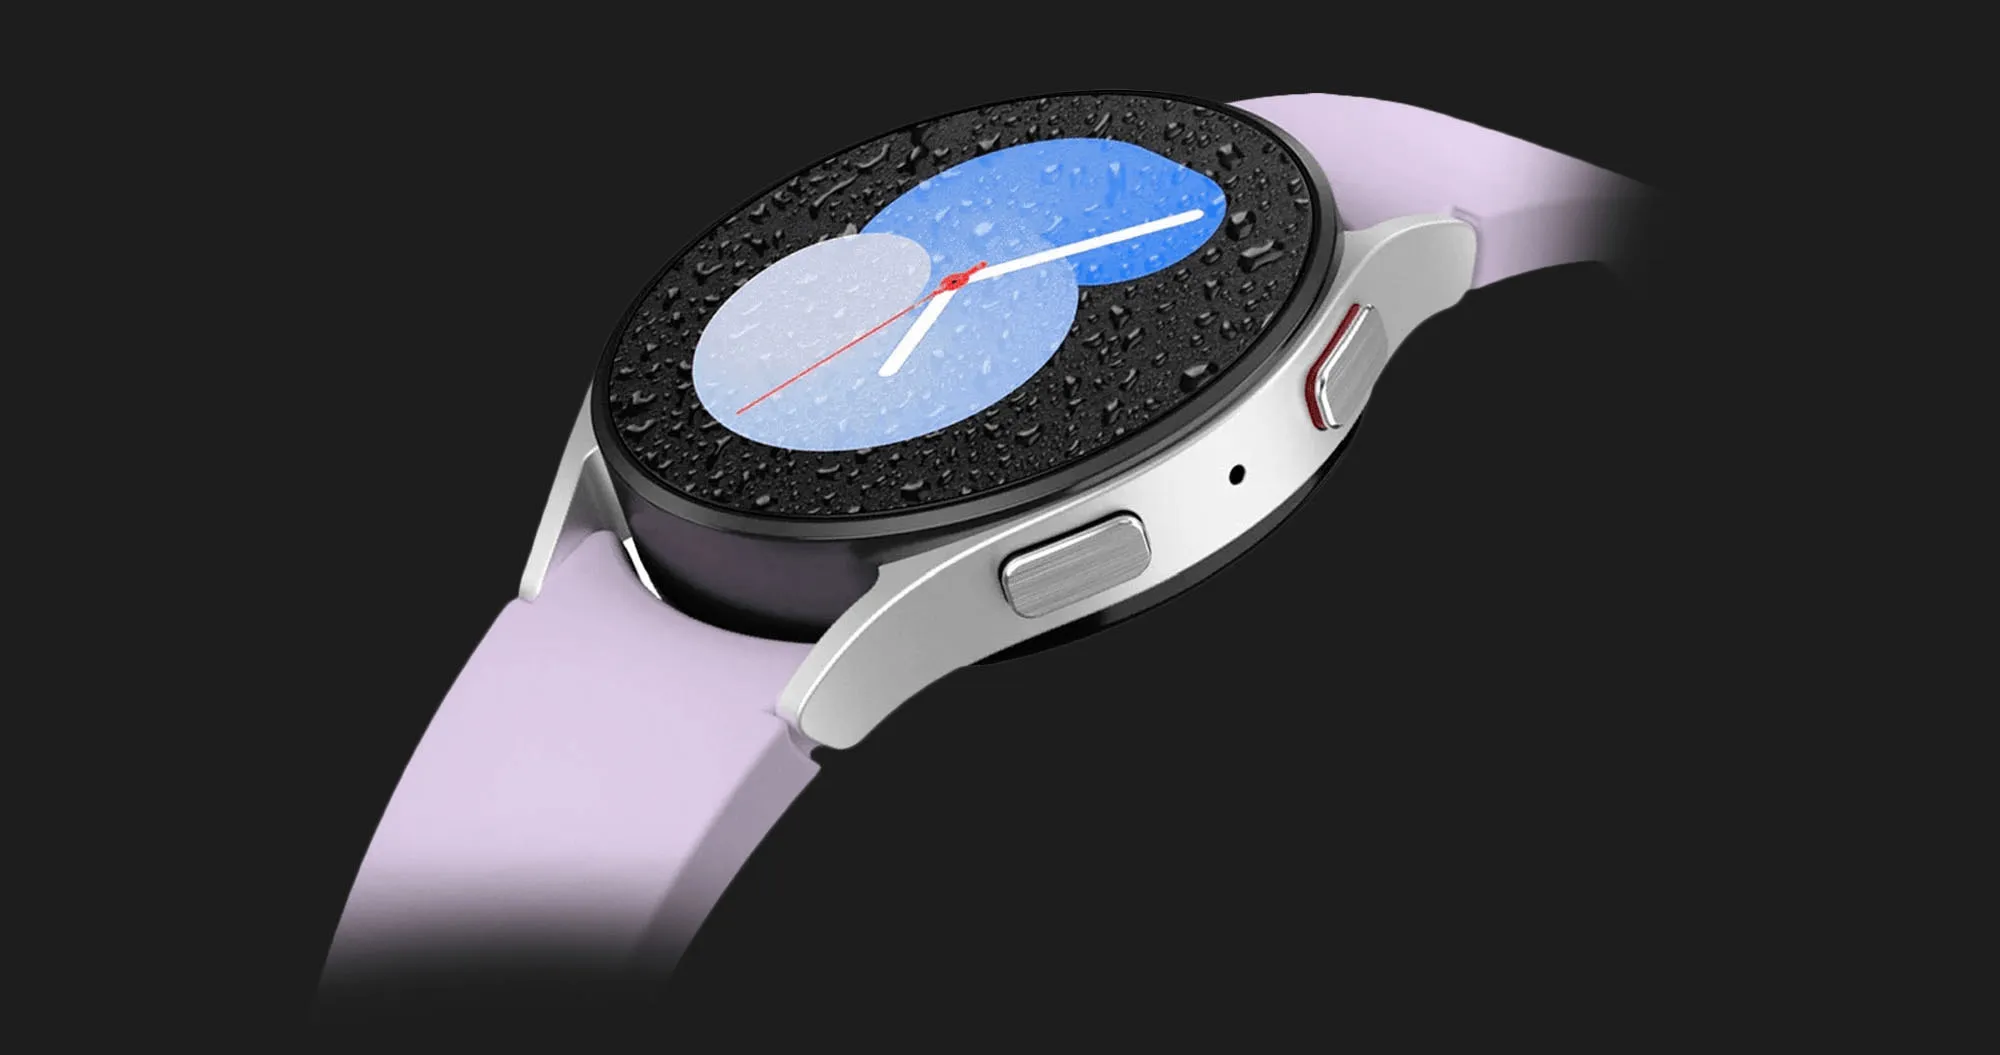 Смарт-годинник Samsung Galaxy Watch 5 44mm (Graphite) (UA)